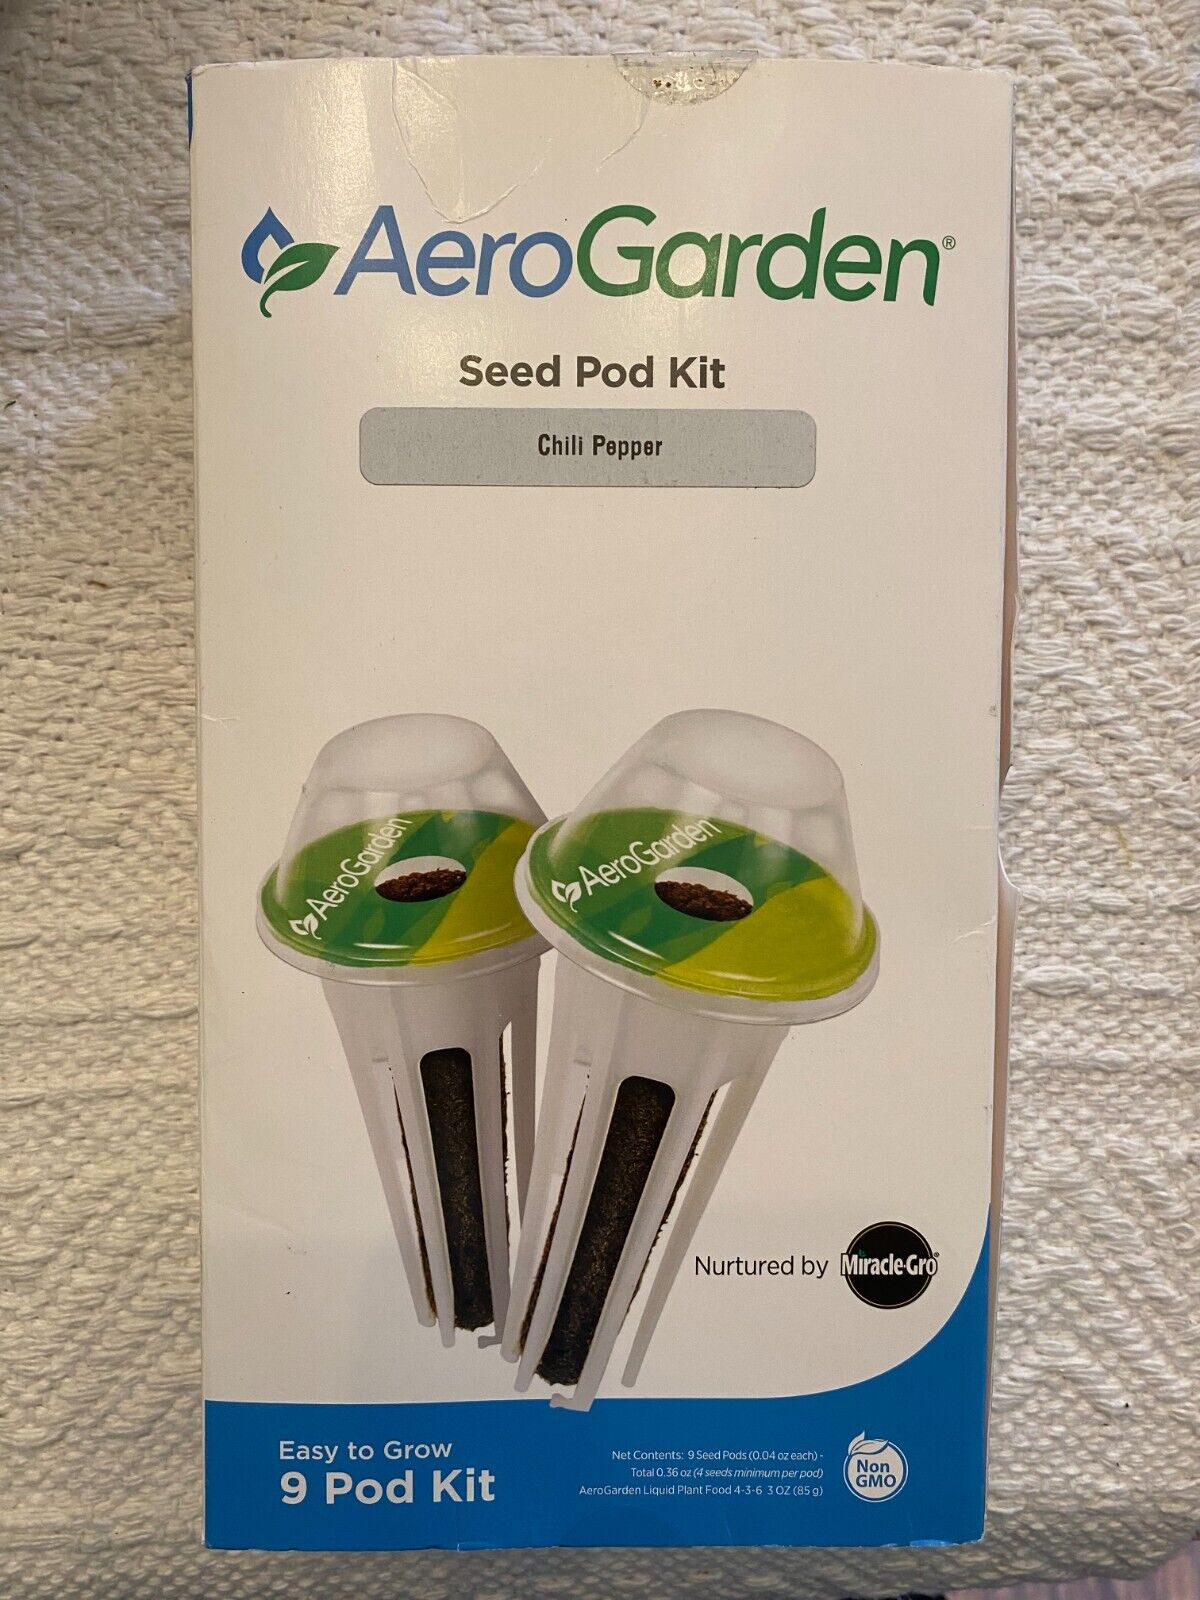 AeroGarden Seed Pod Kit - 9 Pod Kit / Chili Pepper -  Nurtured by Miracle Gro